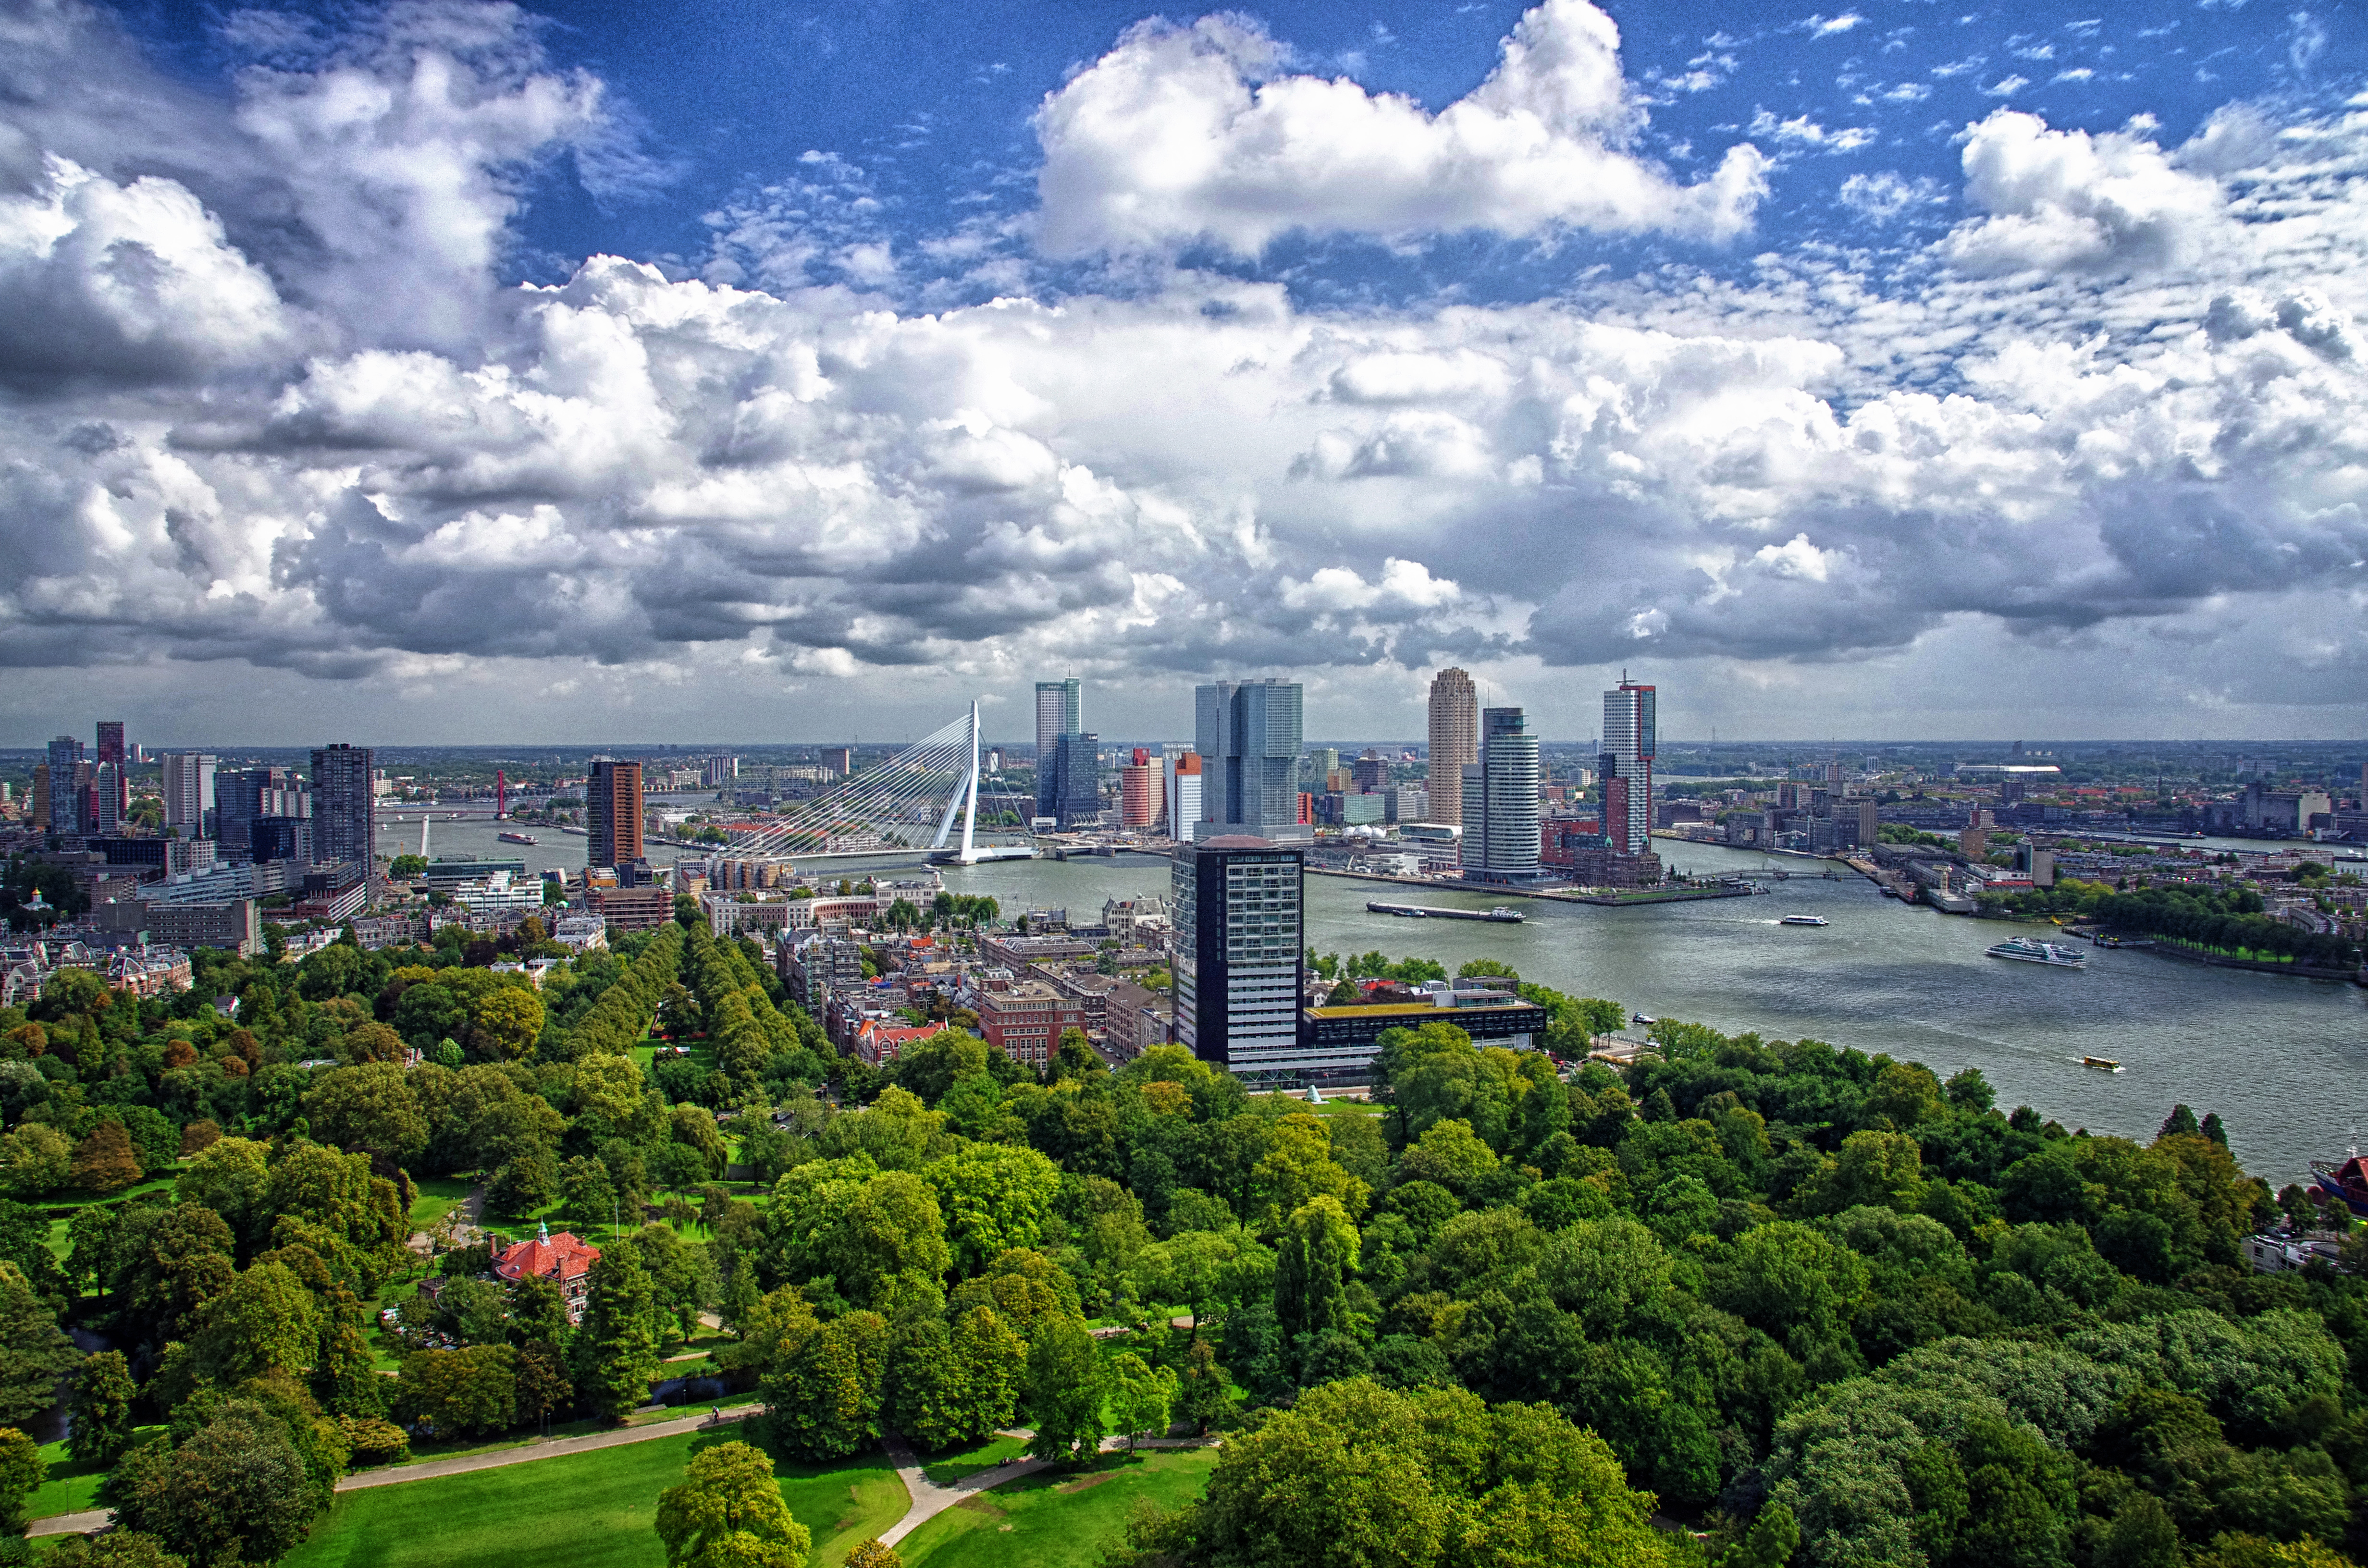 rotterdam, netherlands, man made, cloud, harbor, sky, cities phone background